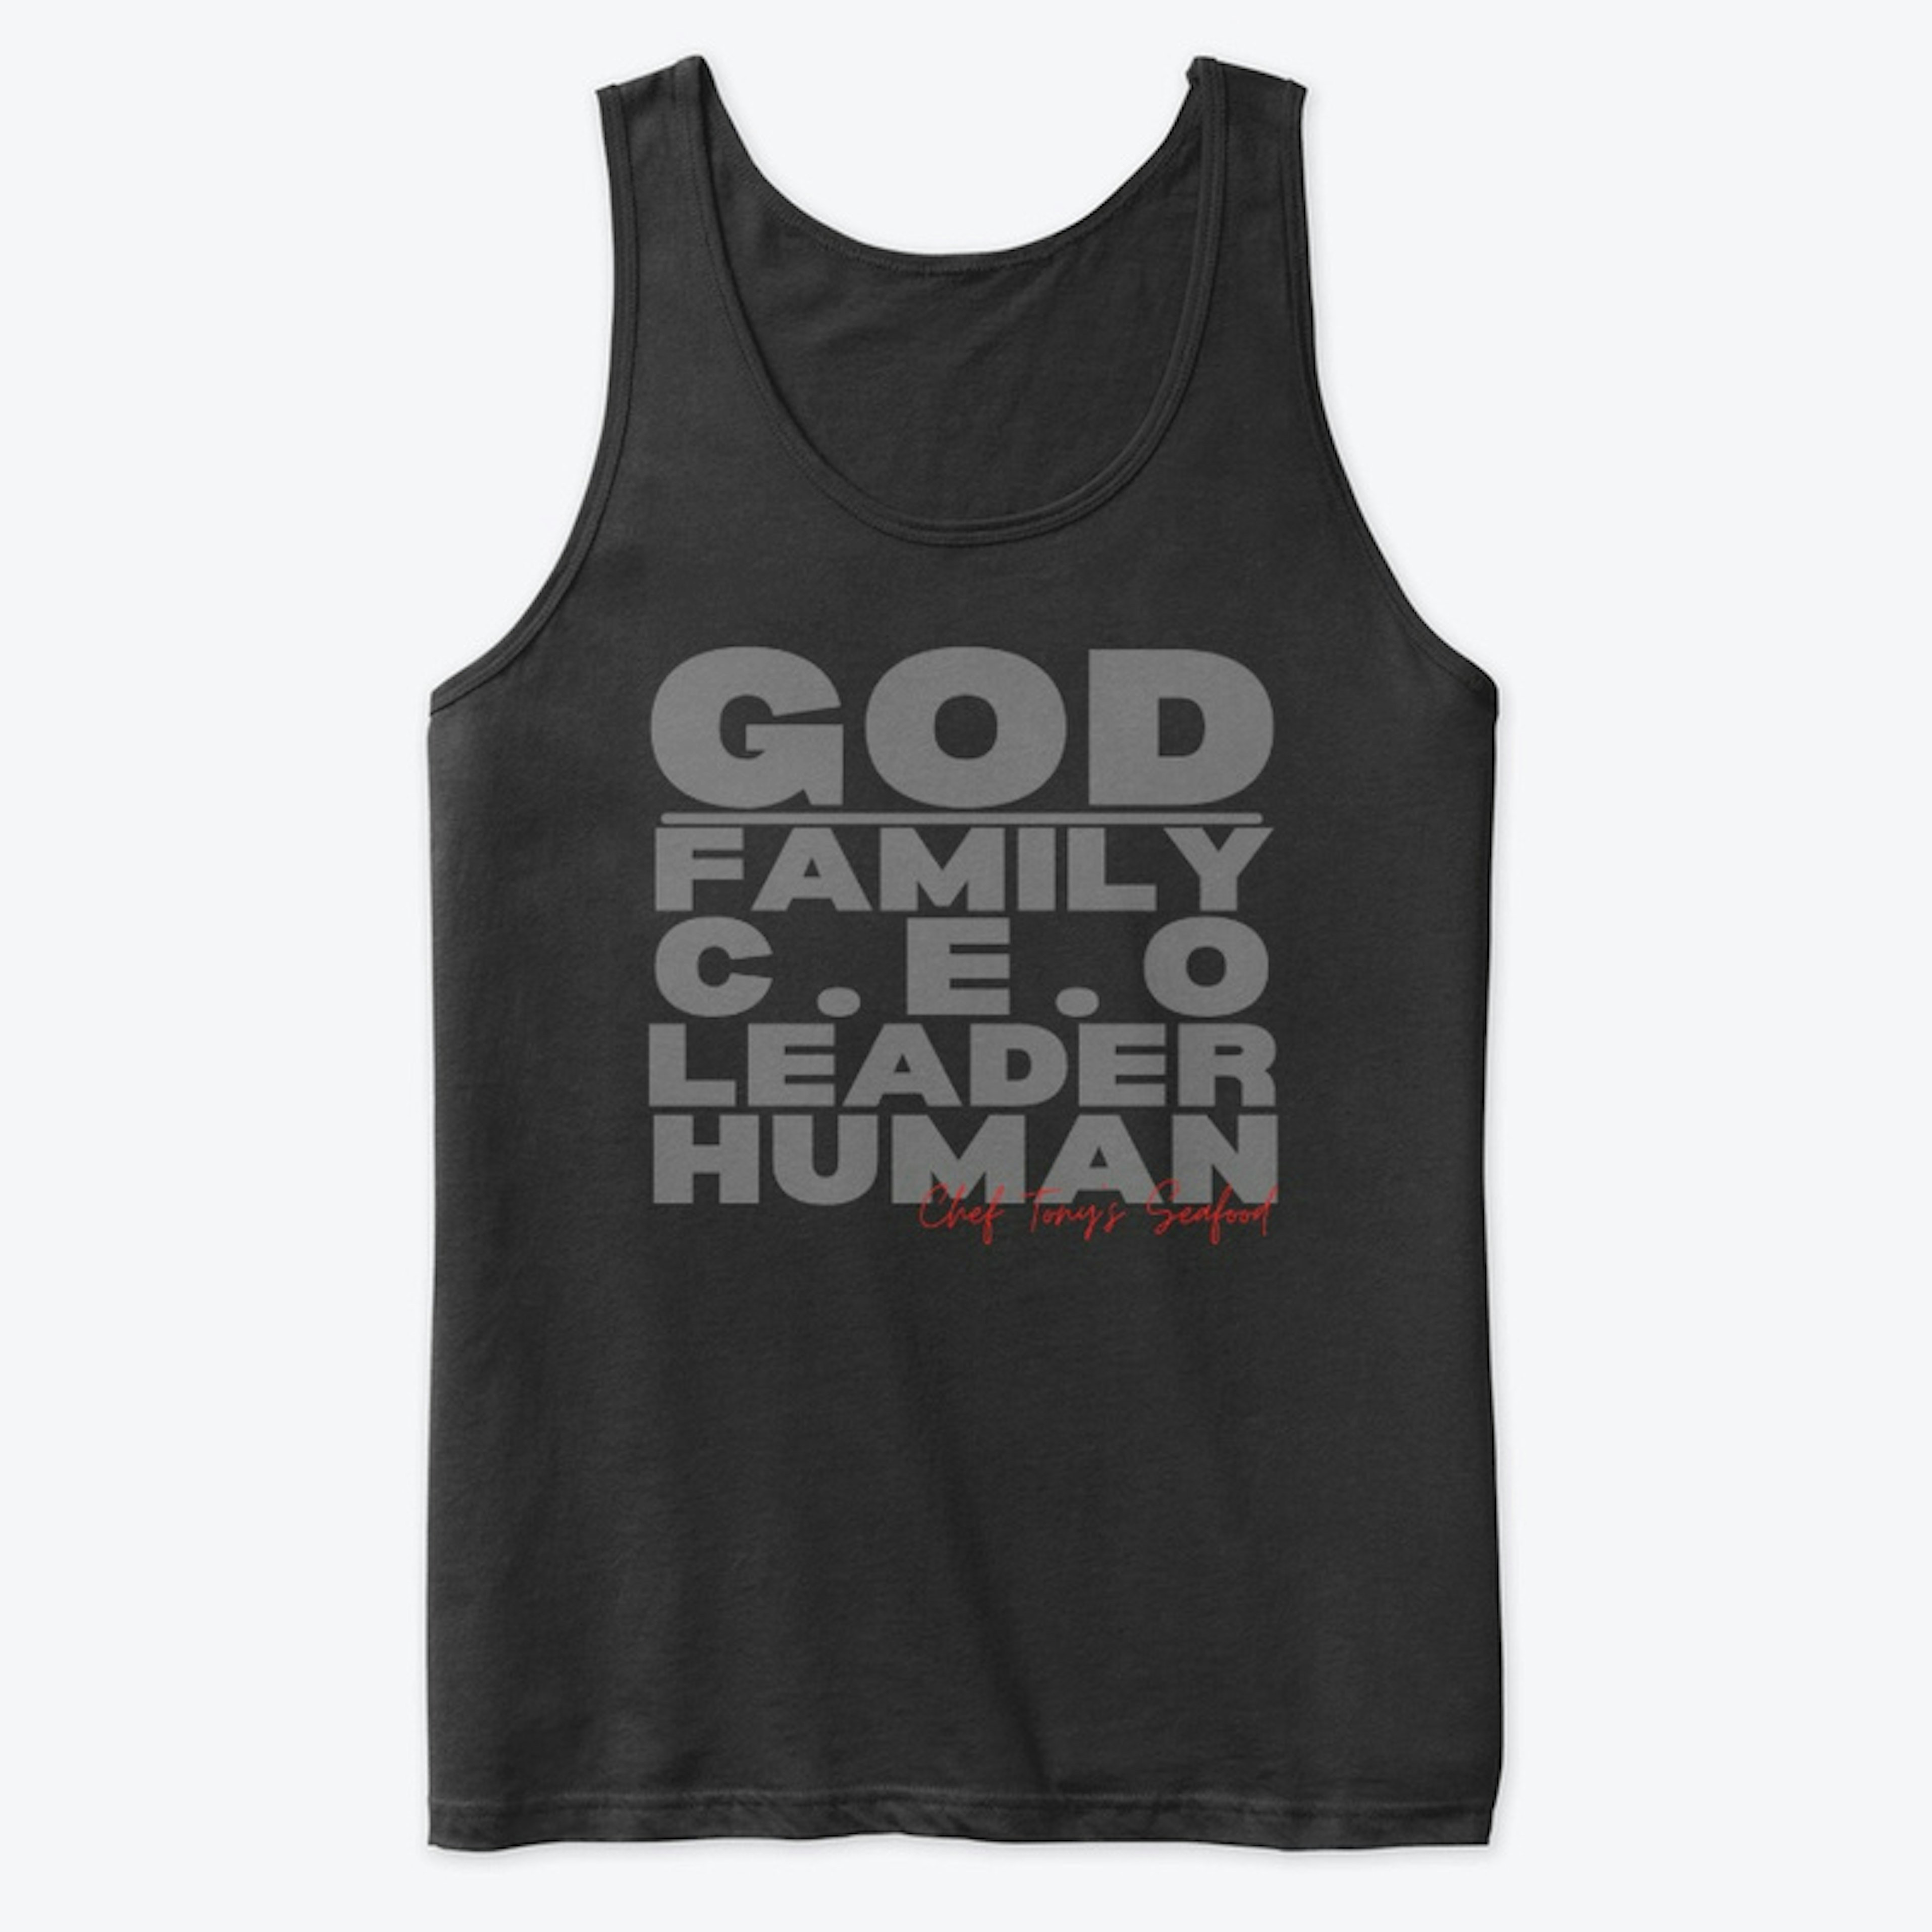 GOD - FAMILY.- CEO -LEADER - HUMAN